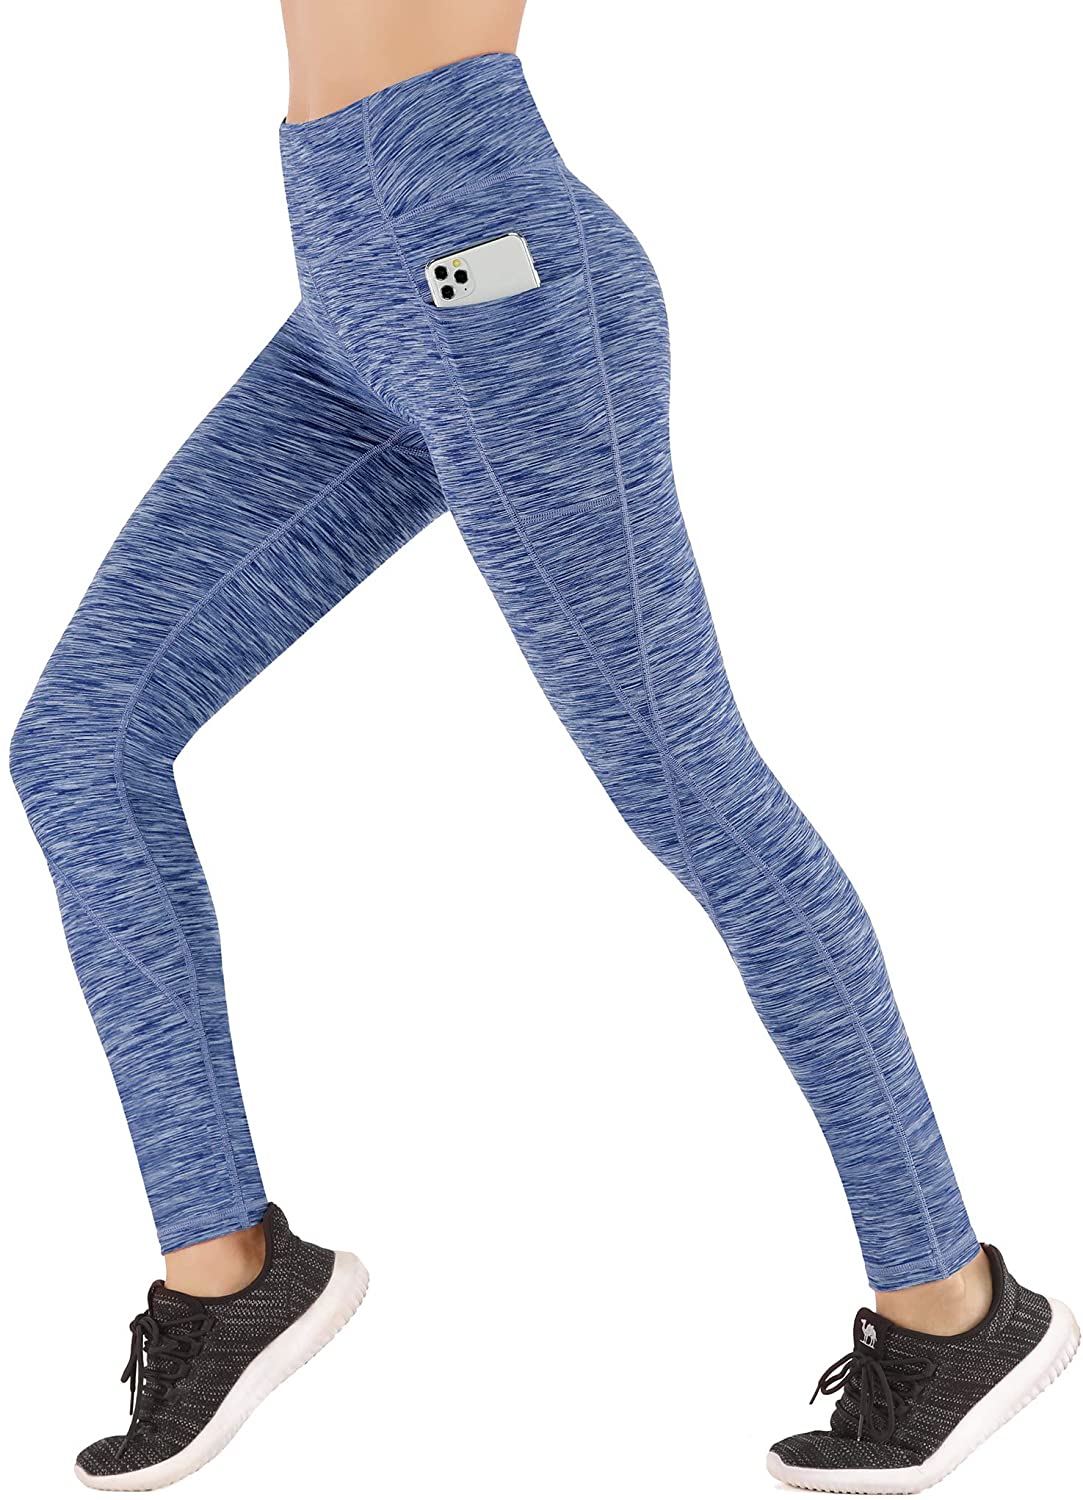 Heathyoga Yoga Pants with Pockets for Women High Waisted Leggings